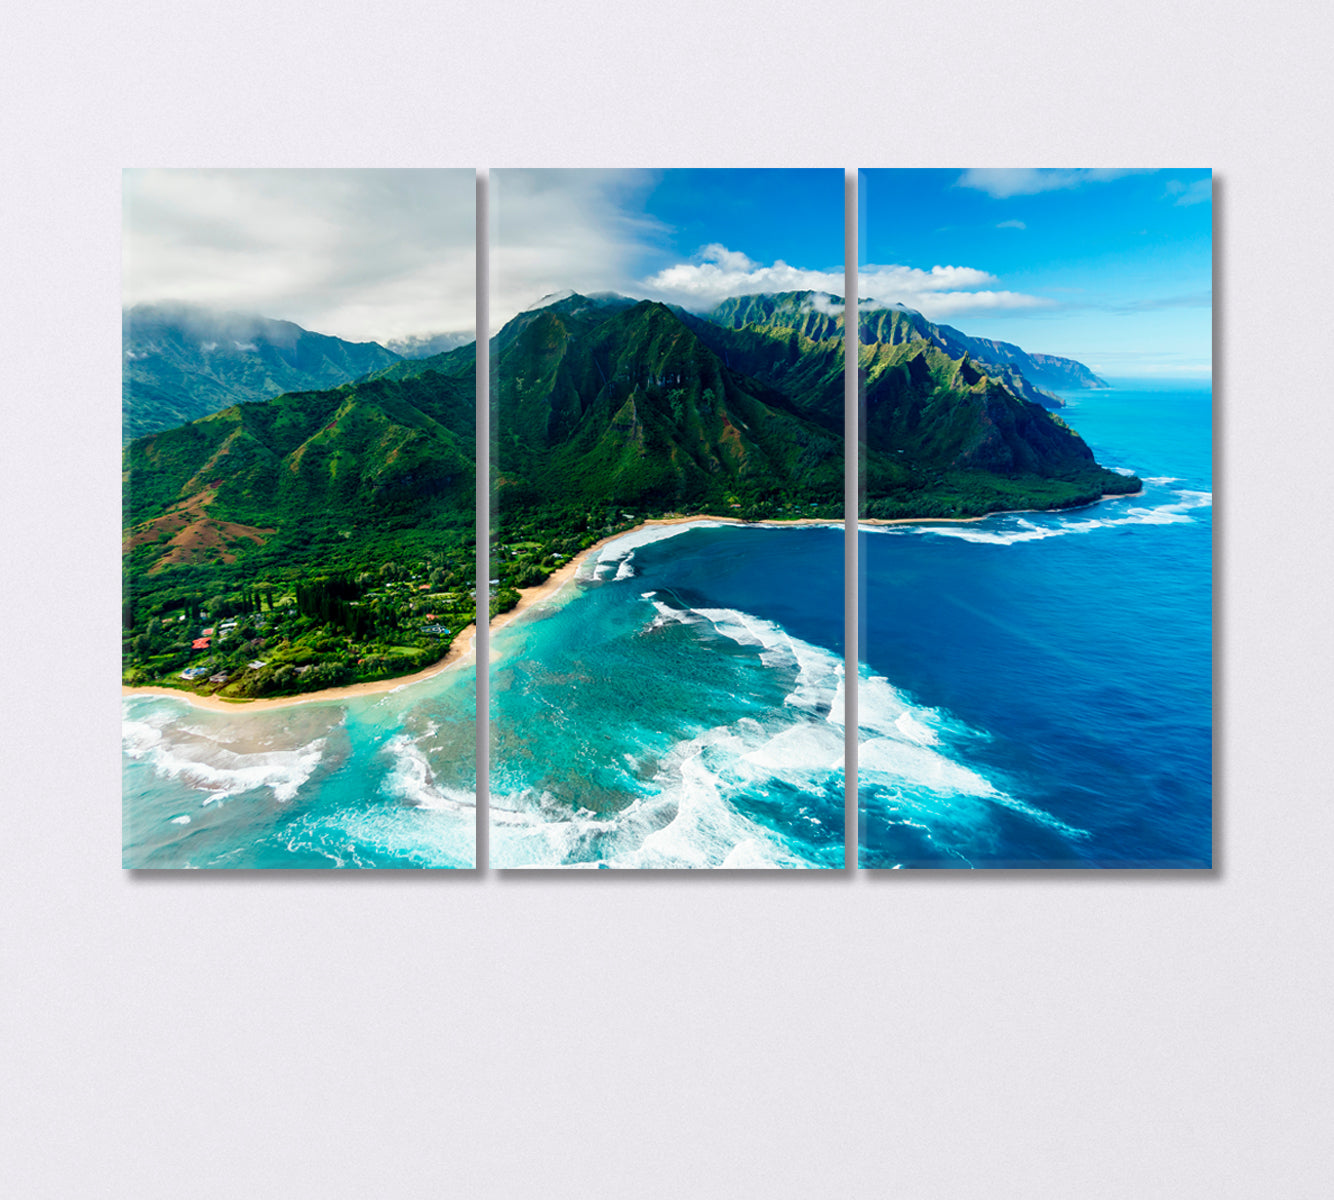 Napali Coast State Wilderness Park Hawaii Canvas Print-Canvas Print-CetArt-3 Panels-36x24 inches-CetArt